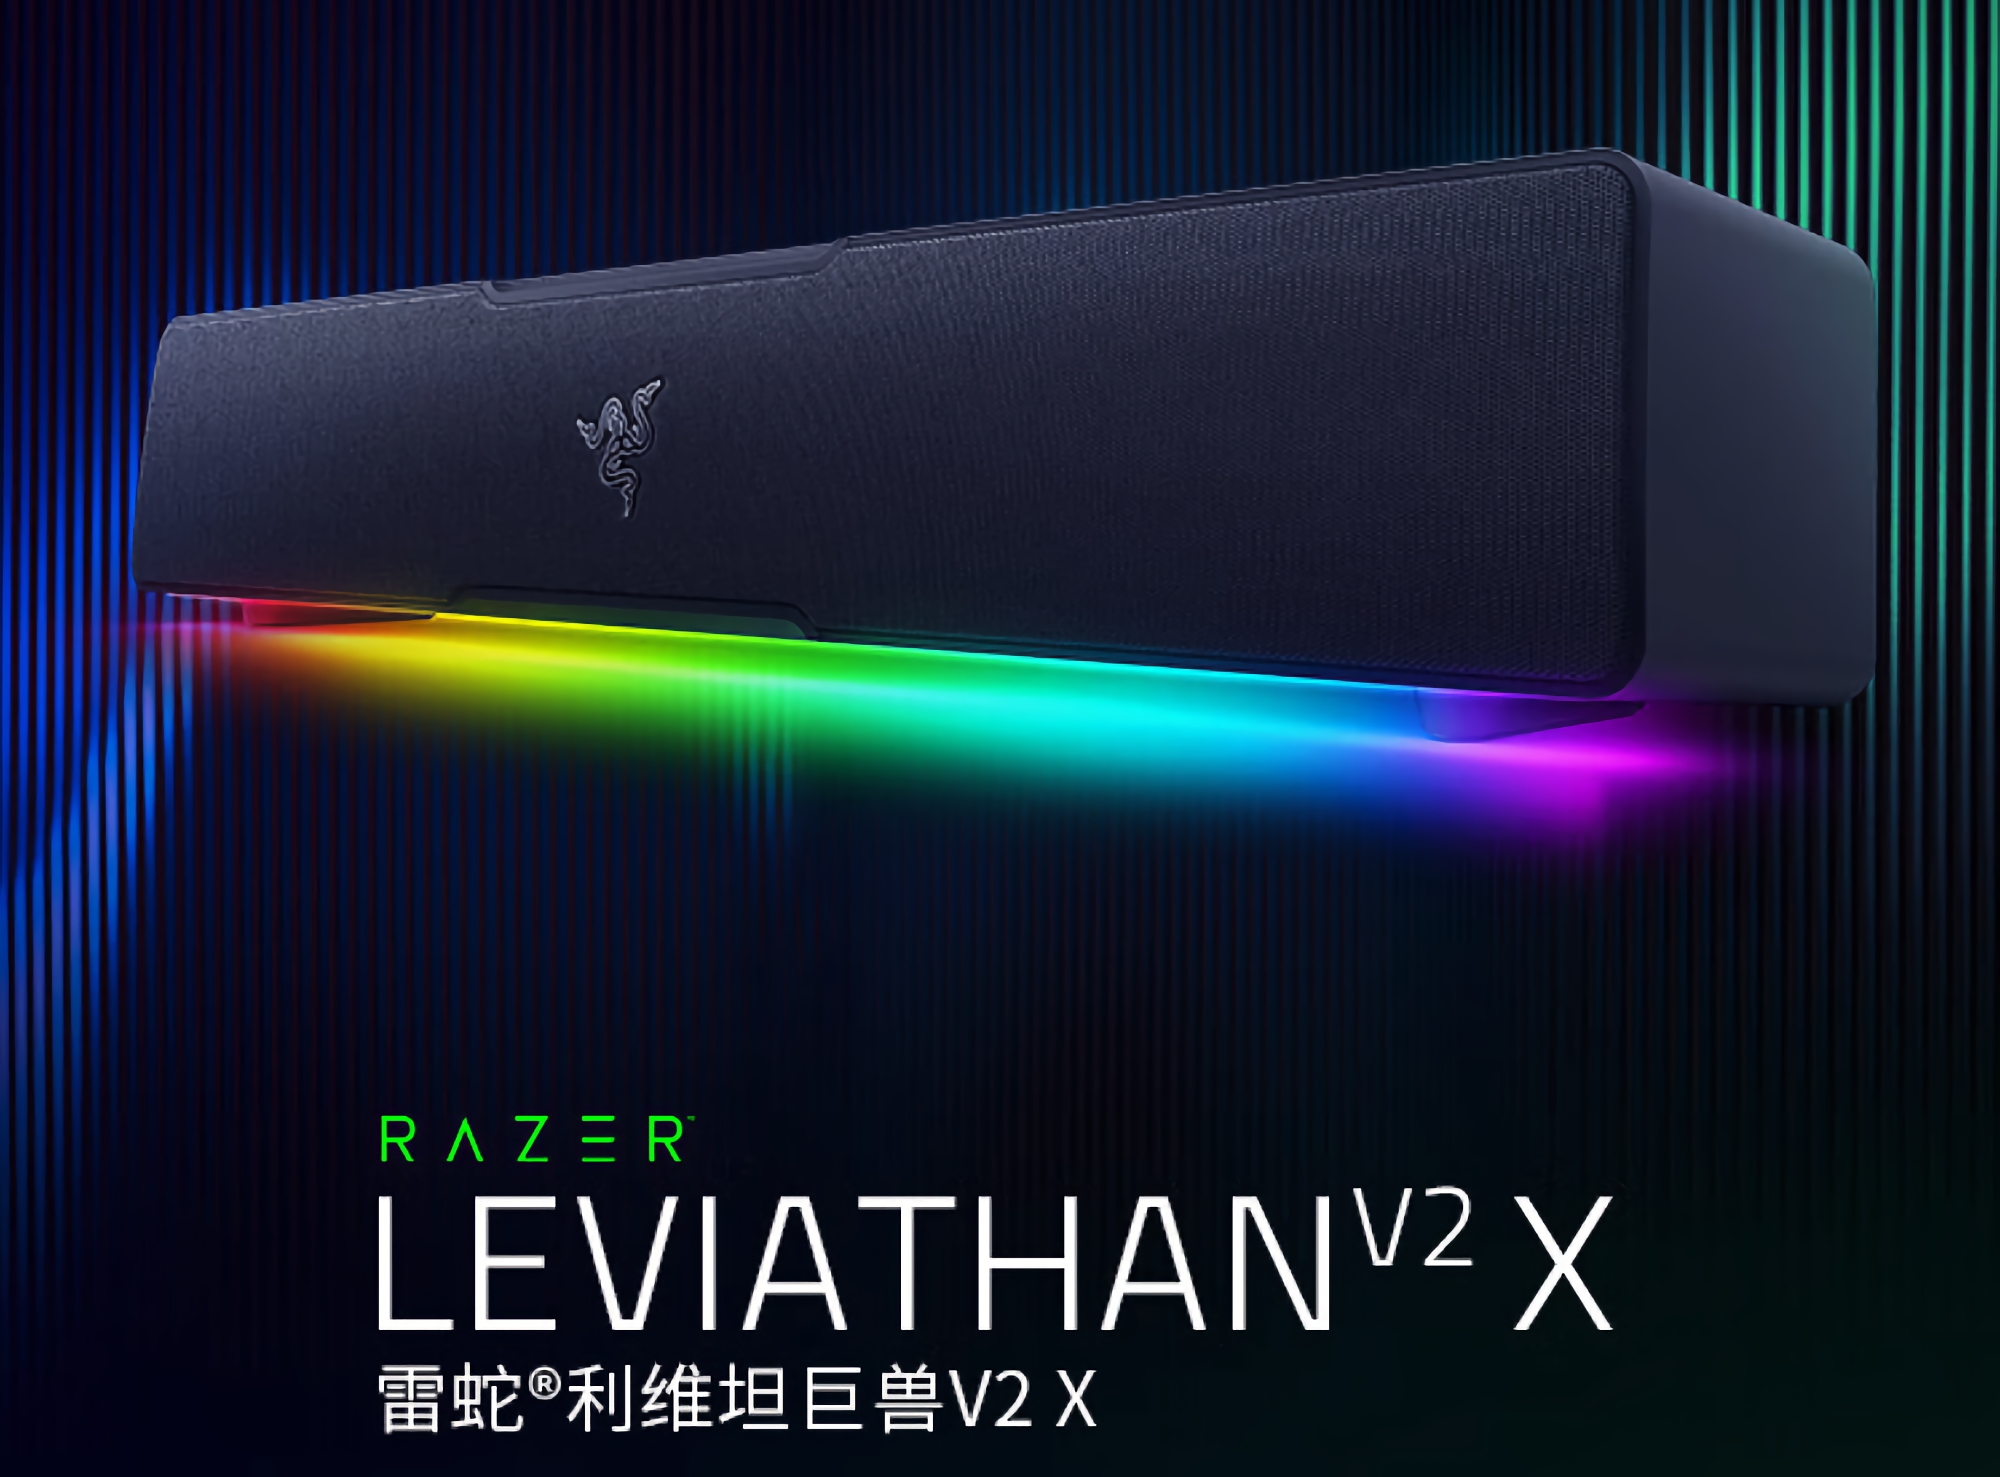 Razer Leviathan V2 X: compact 65-watt soundbar with Bluetooth, USB 